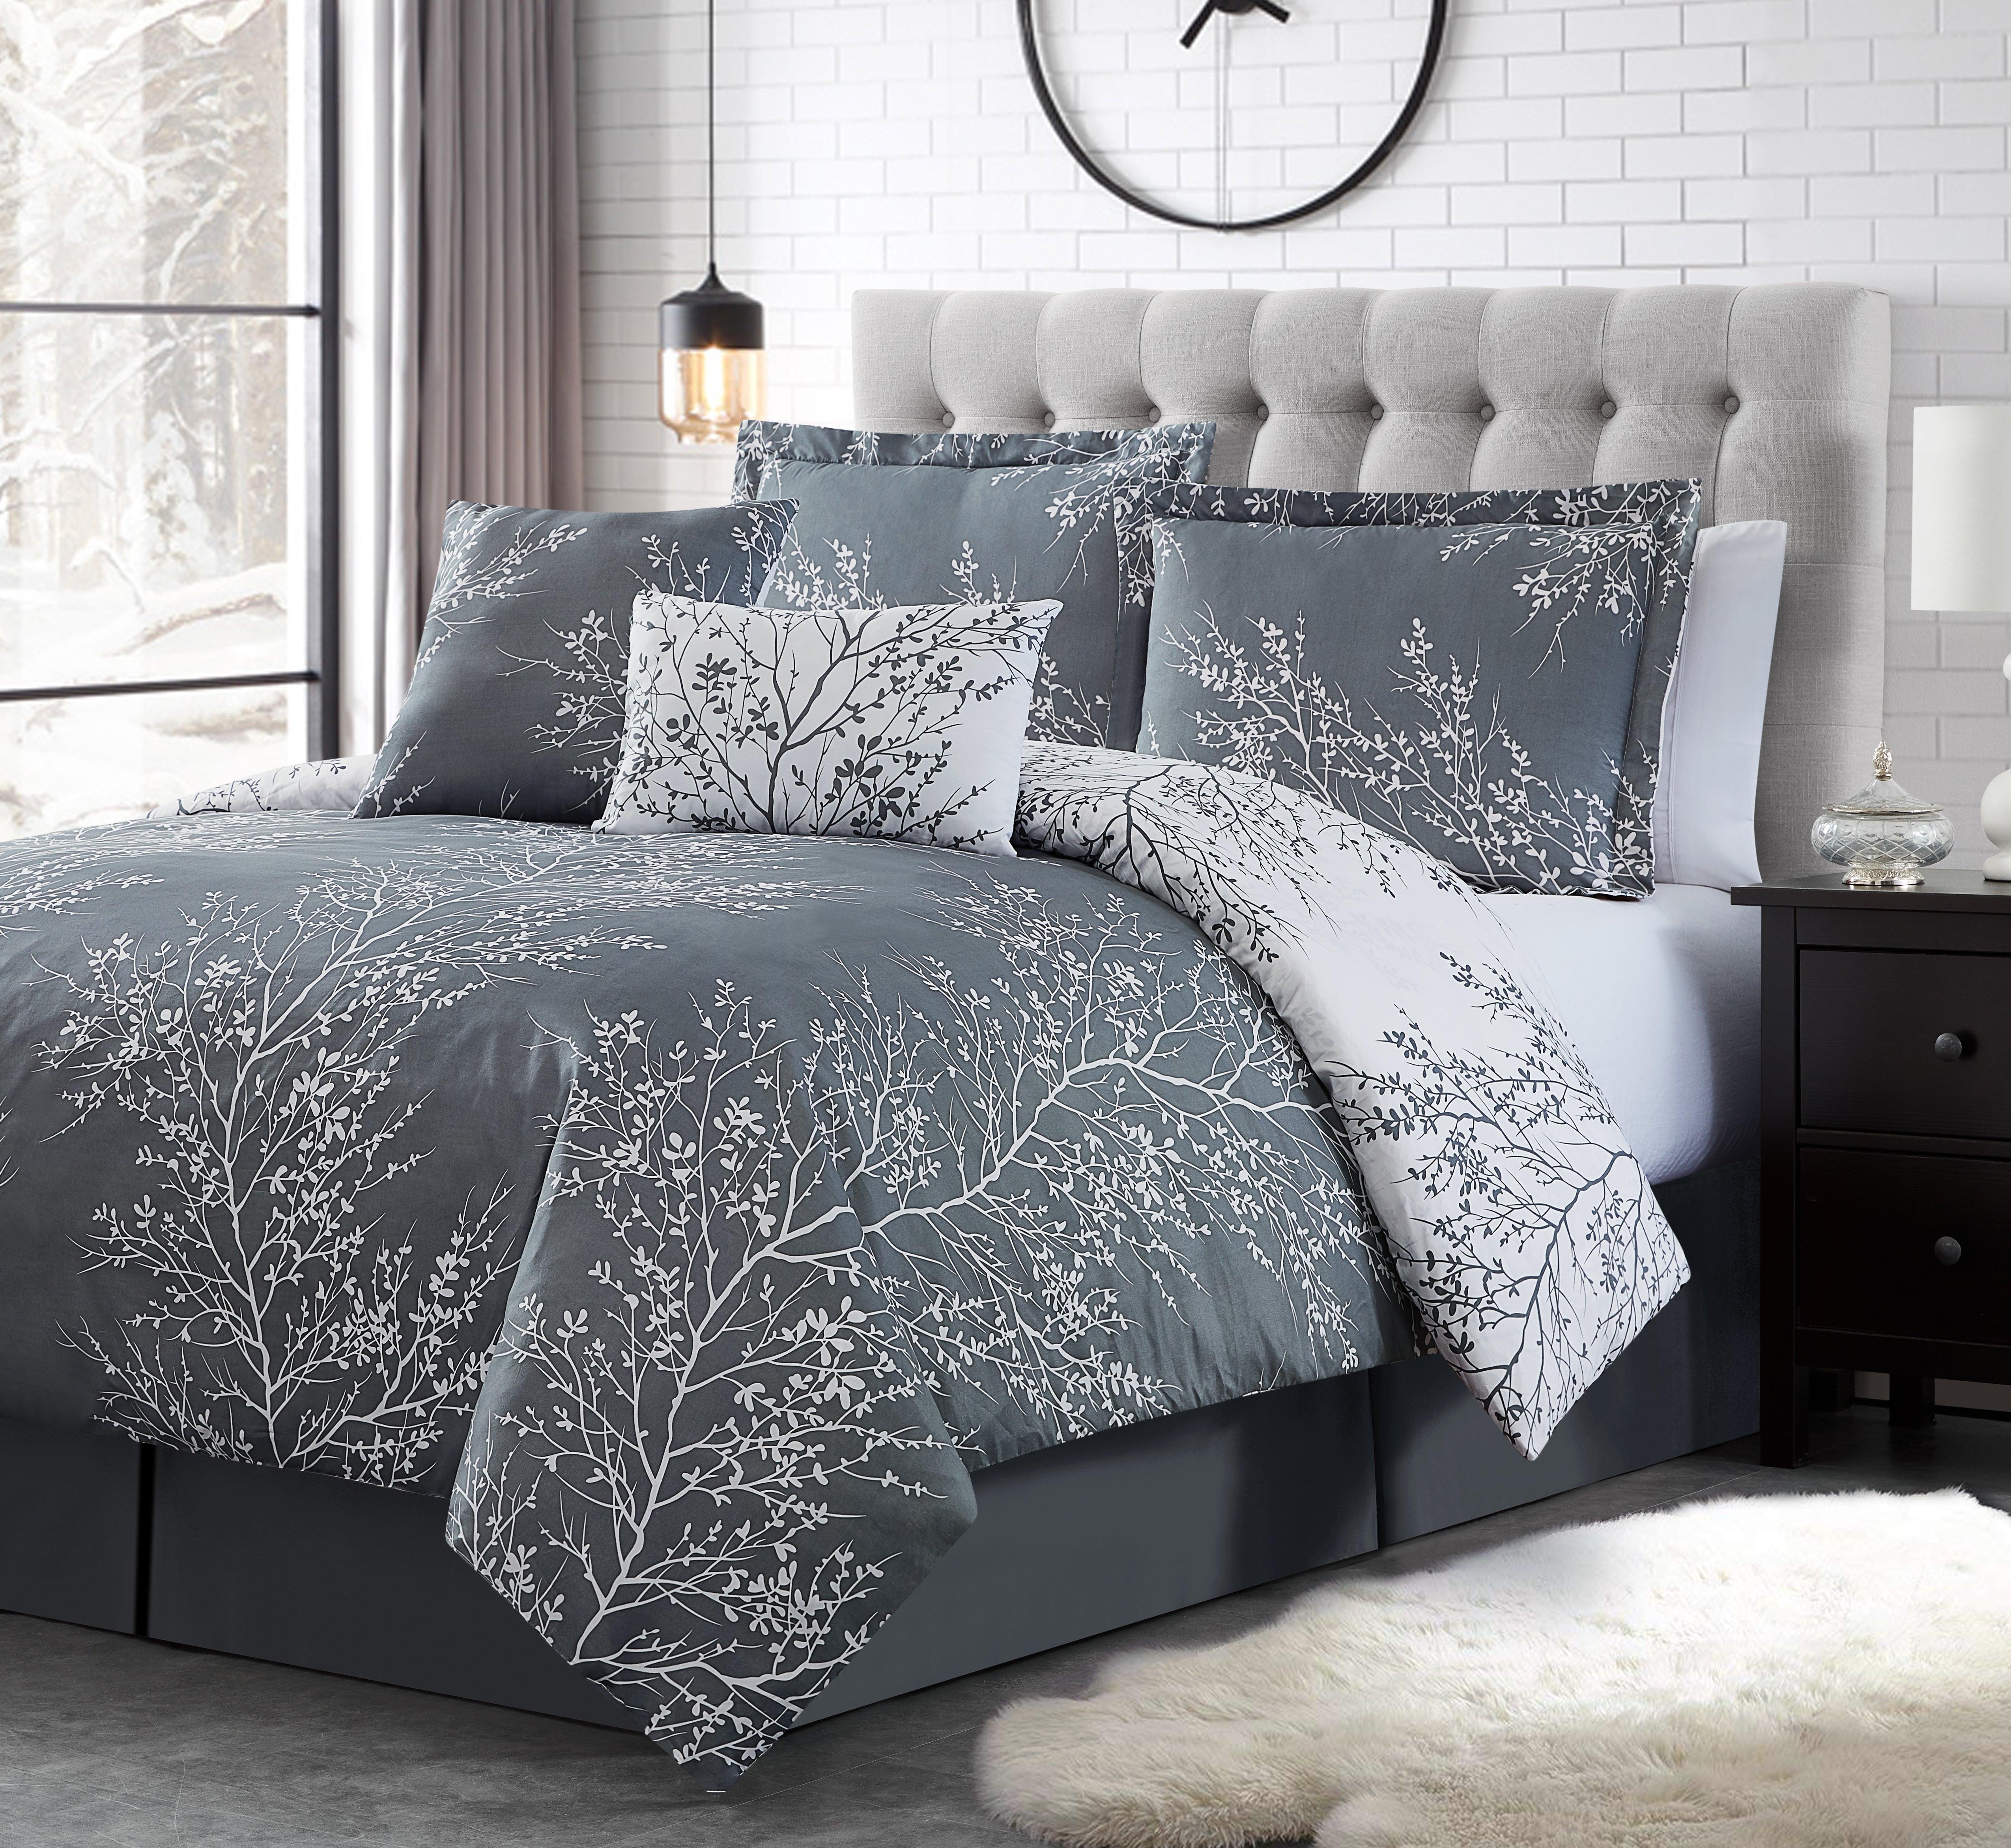 Foliage Reversible Comforter Set + Two Free Sham Pillows - Spirit Linen - Grey